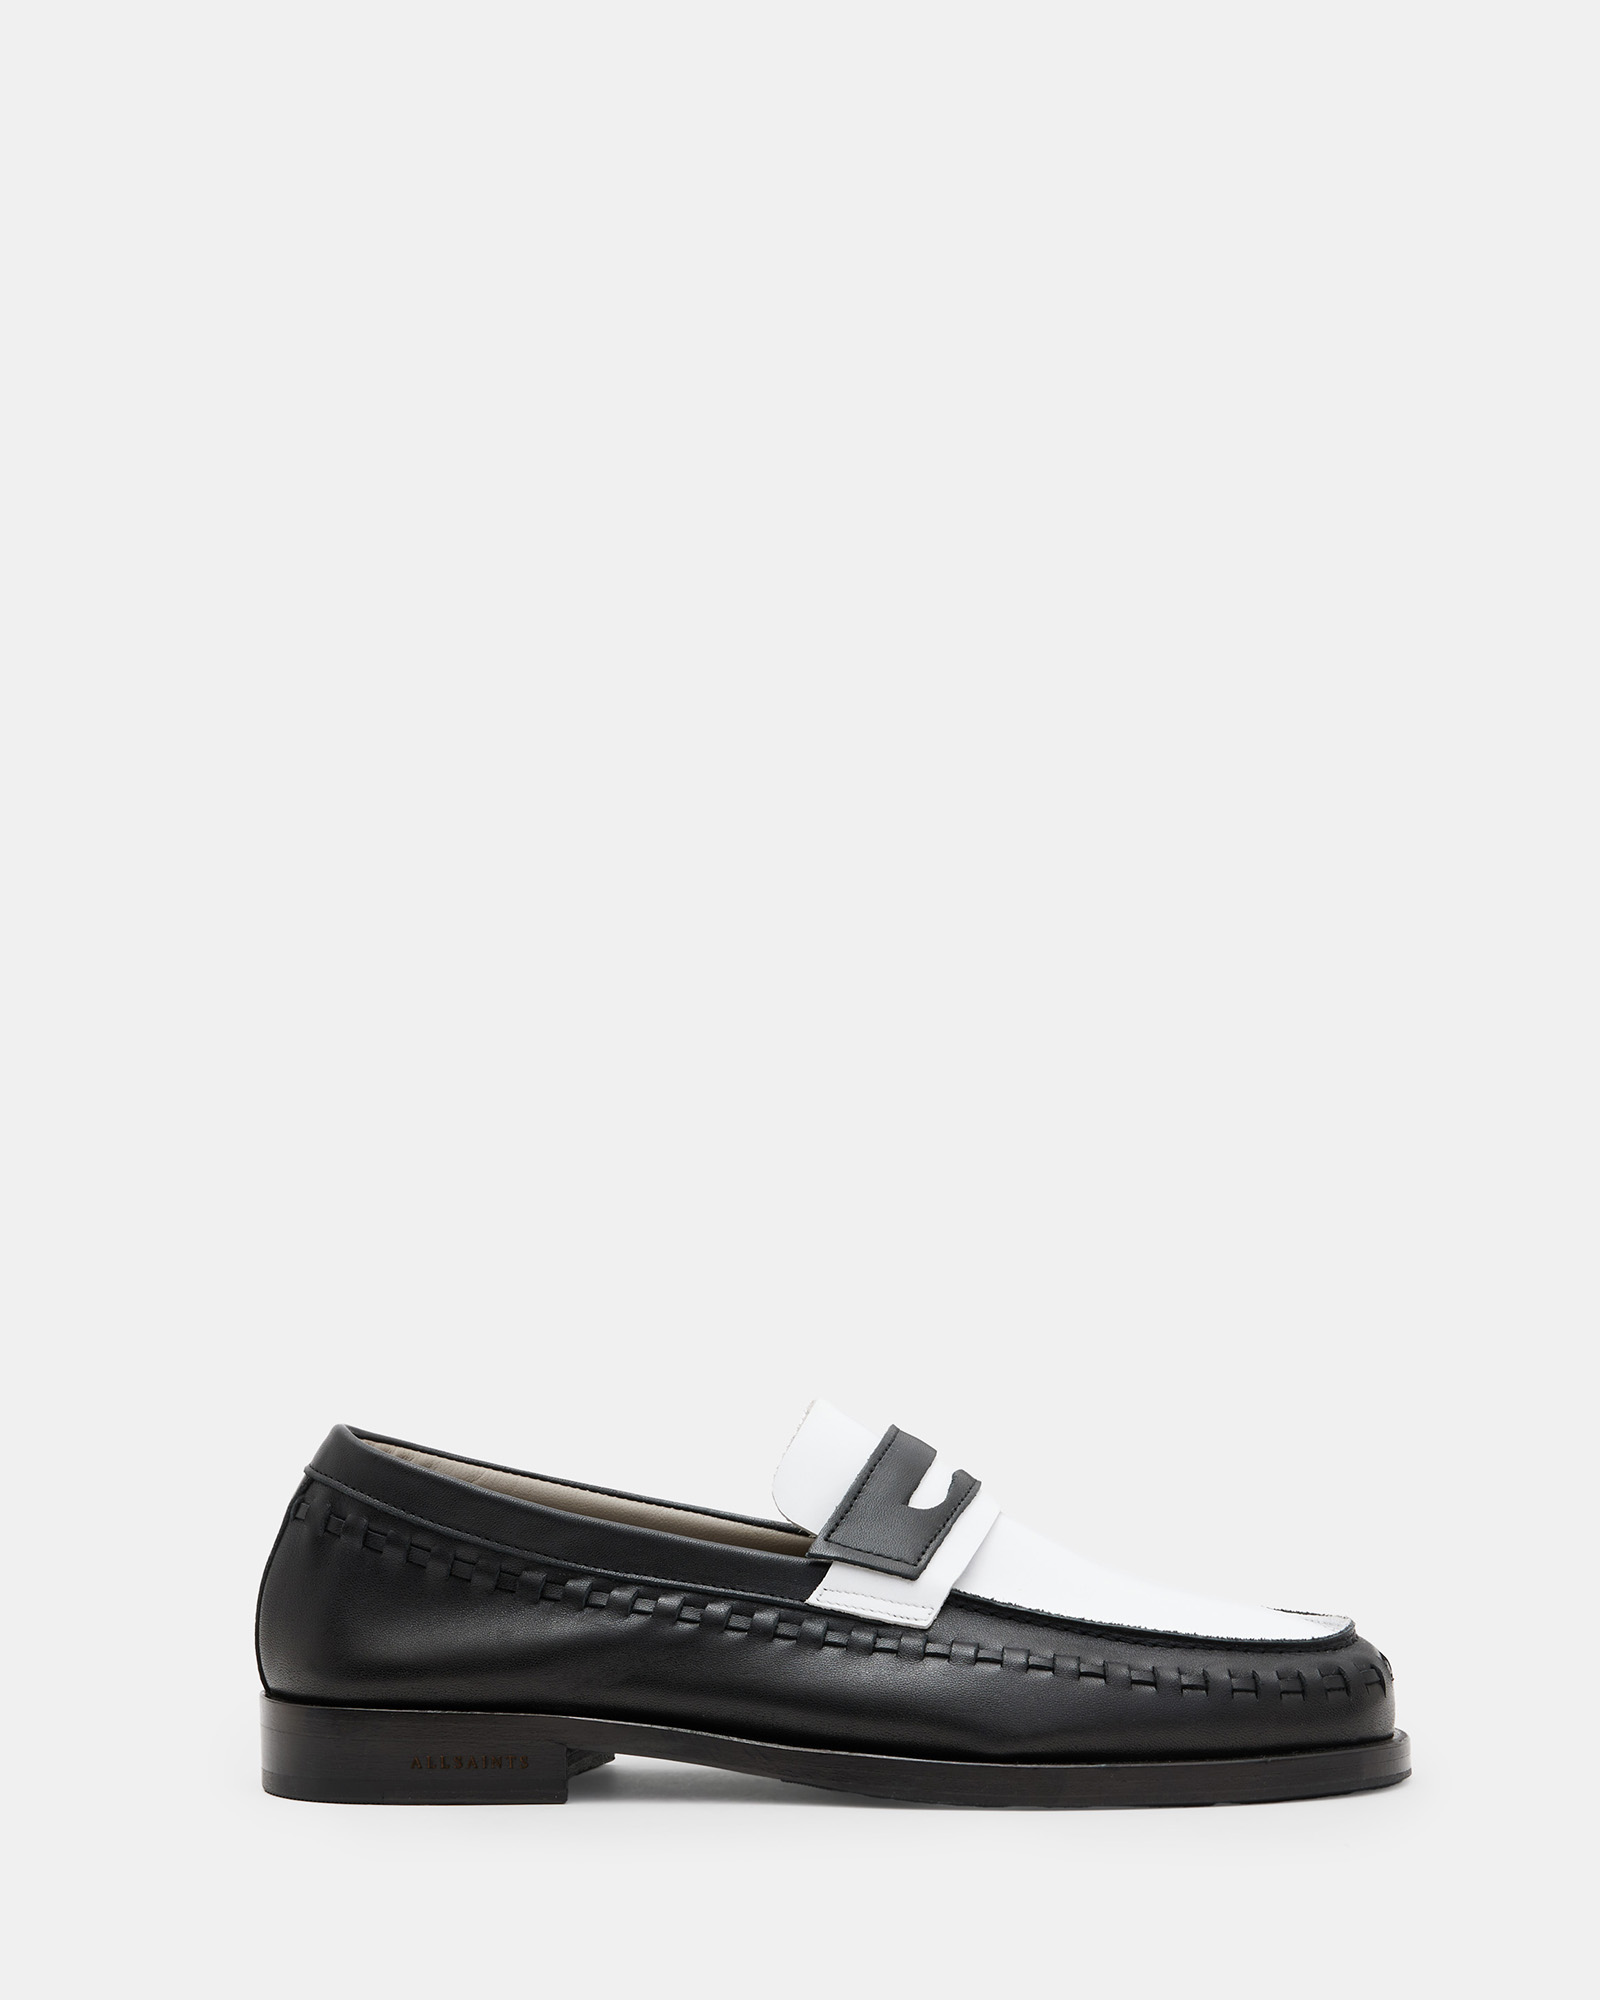 AllSaints Sammy Leather Loafer Shoes,, Black/White